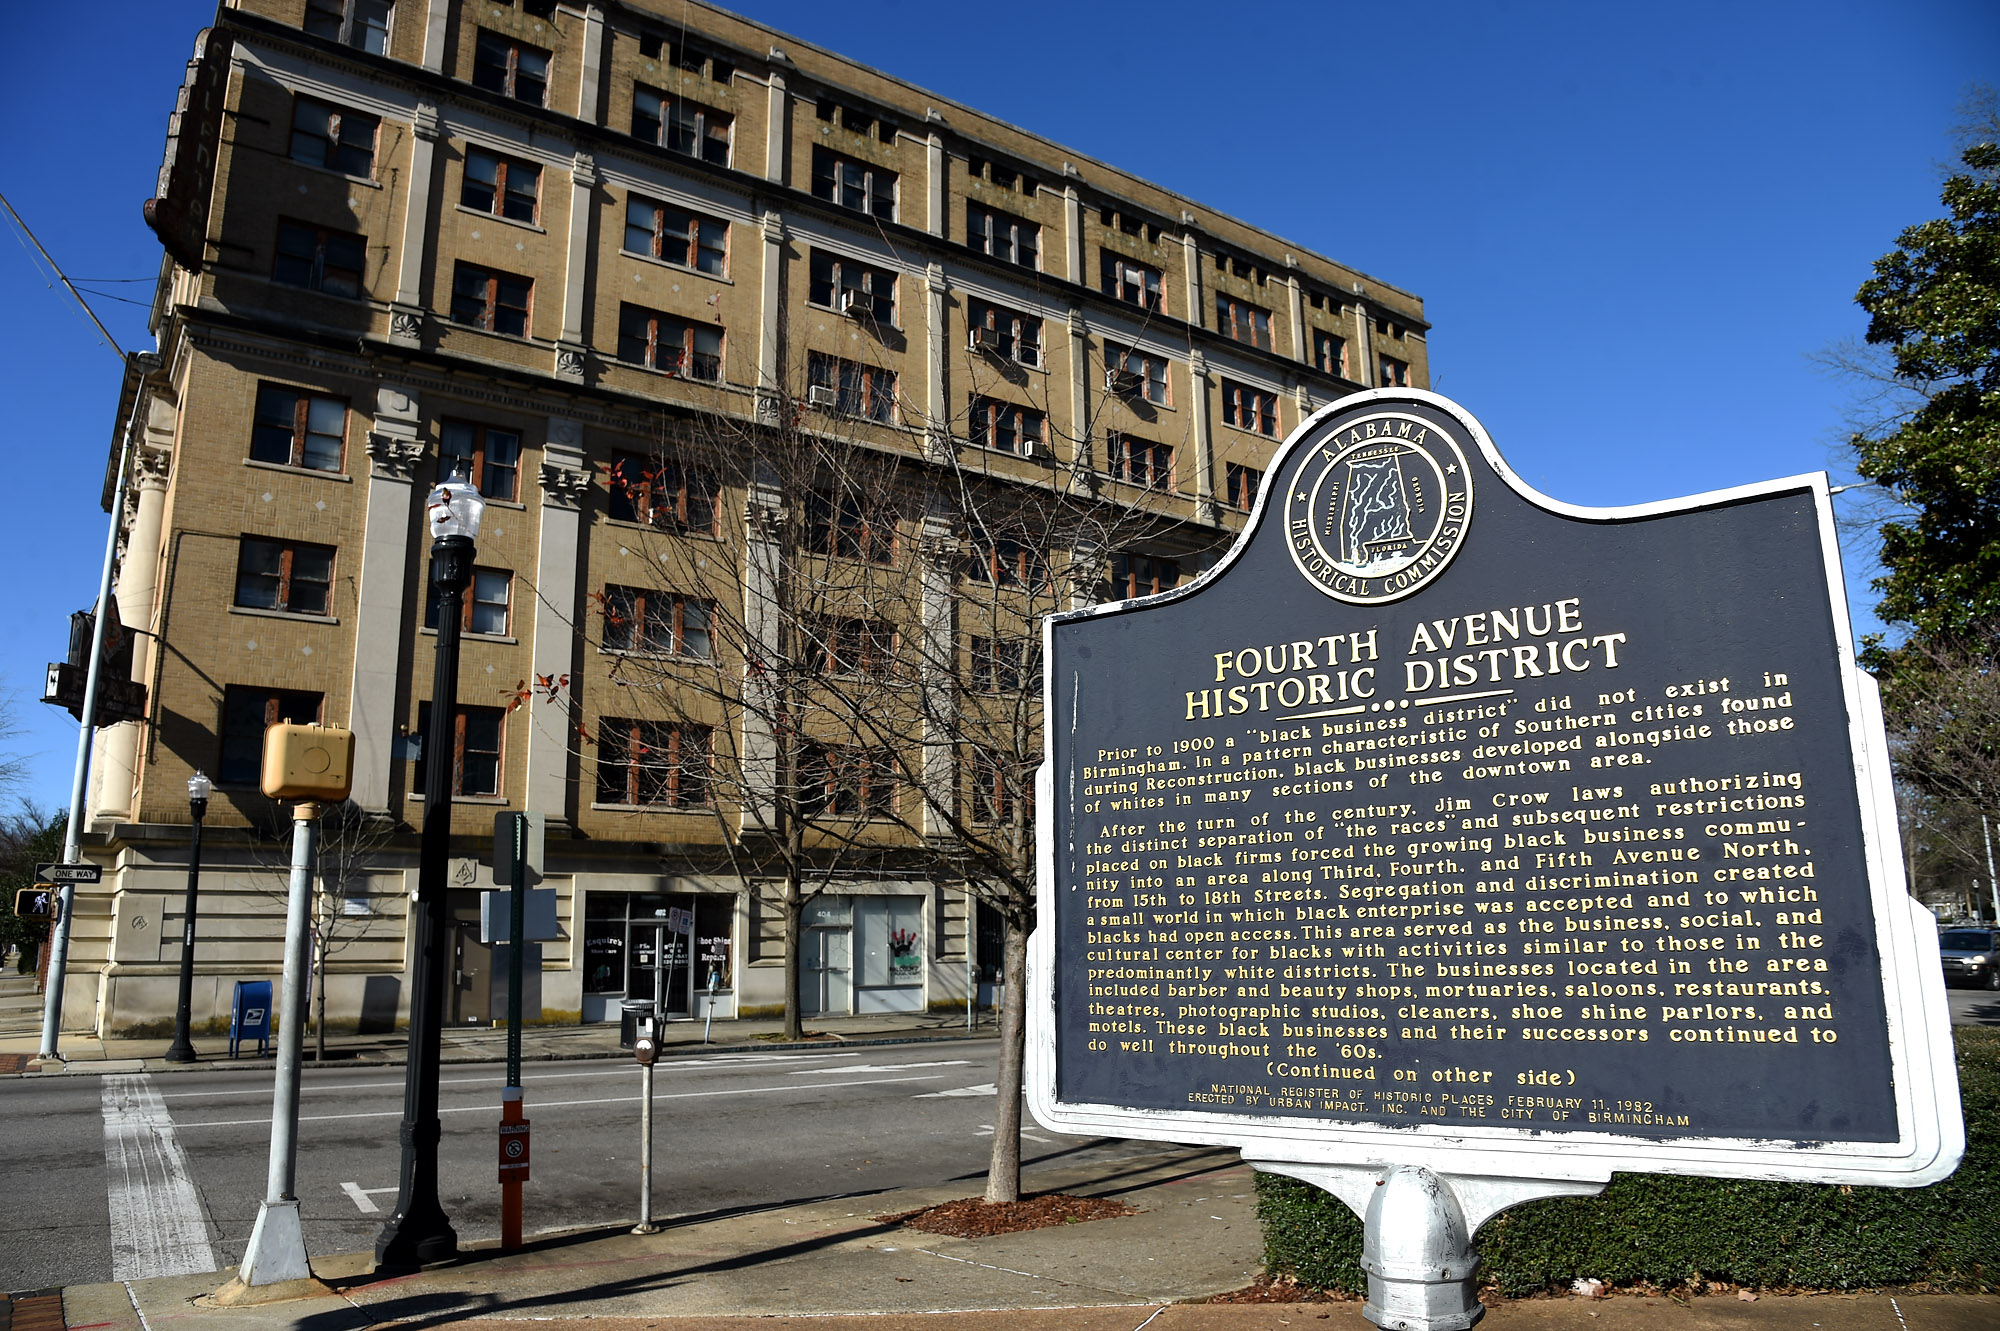 Big changes ahead for Birmingham's Fourth Avenue Historic District